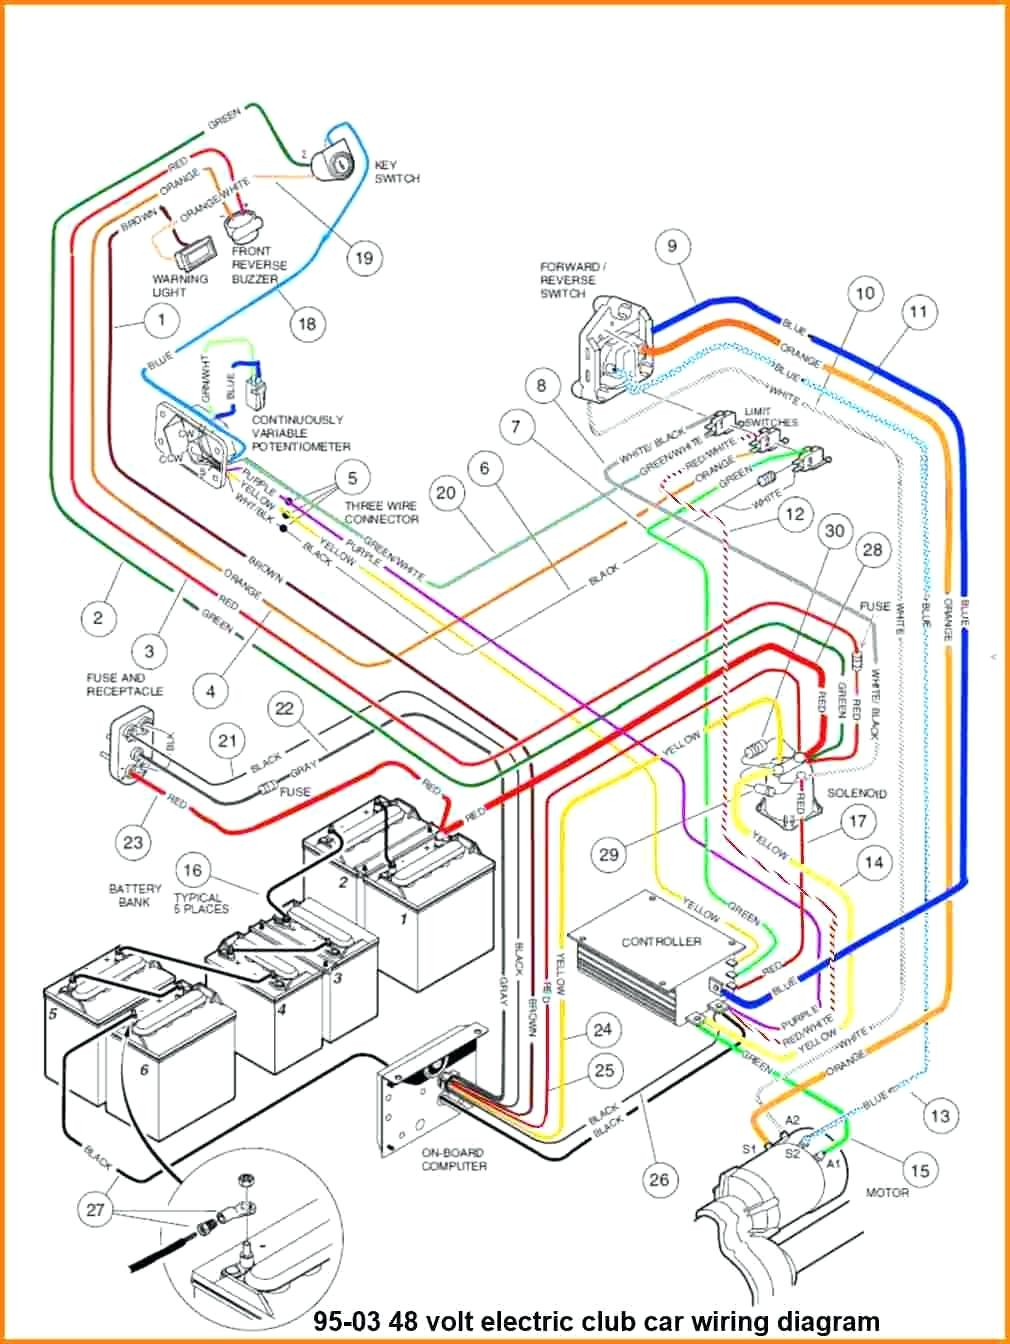 36 Volt Wiring Diagram - Wiring Diagrams - 36 Volt Golf Cart Wiring Diagram